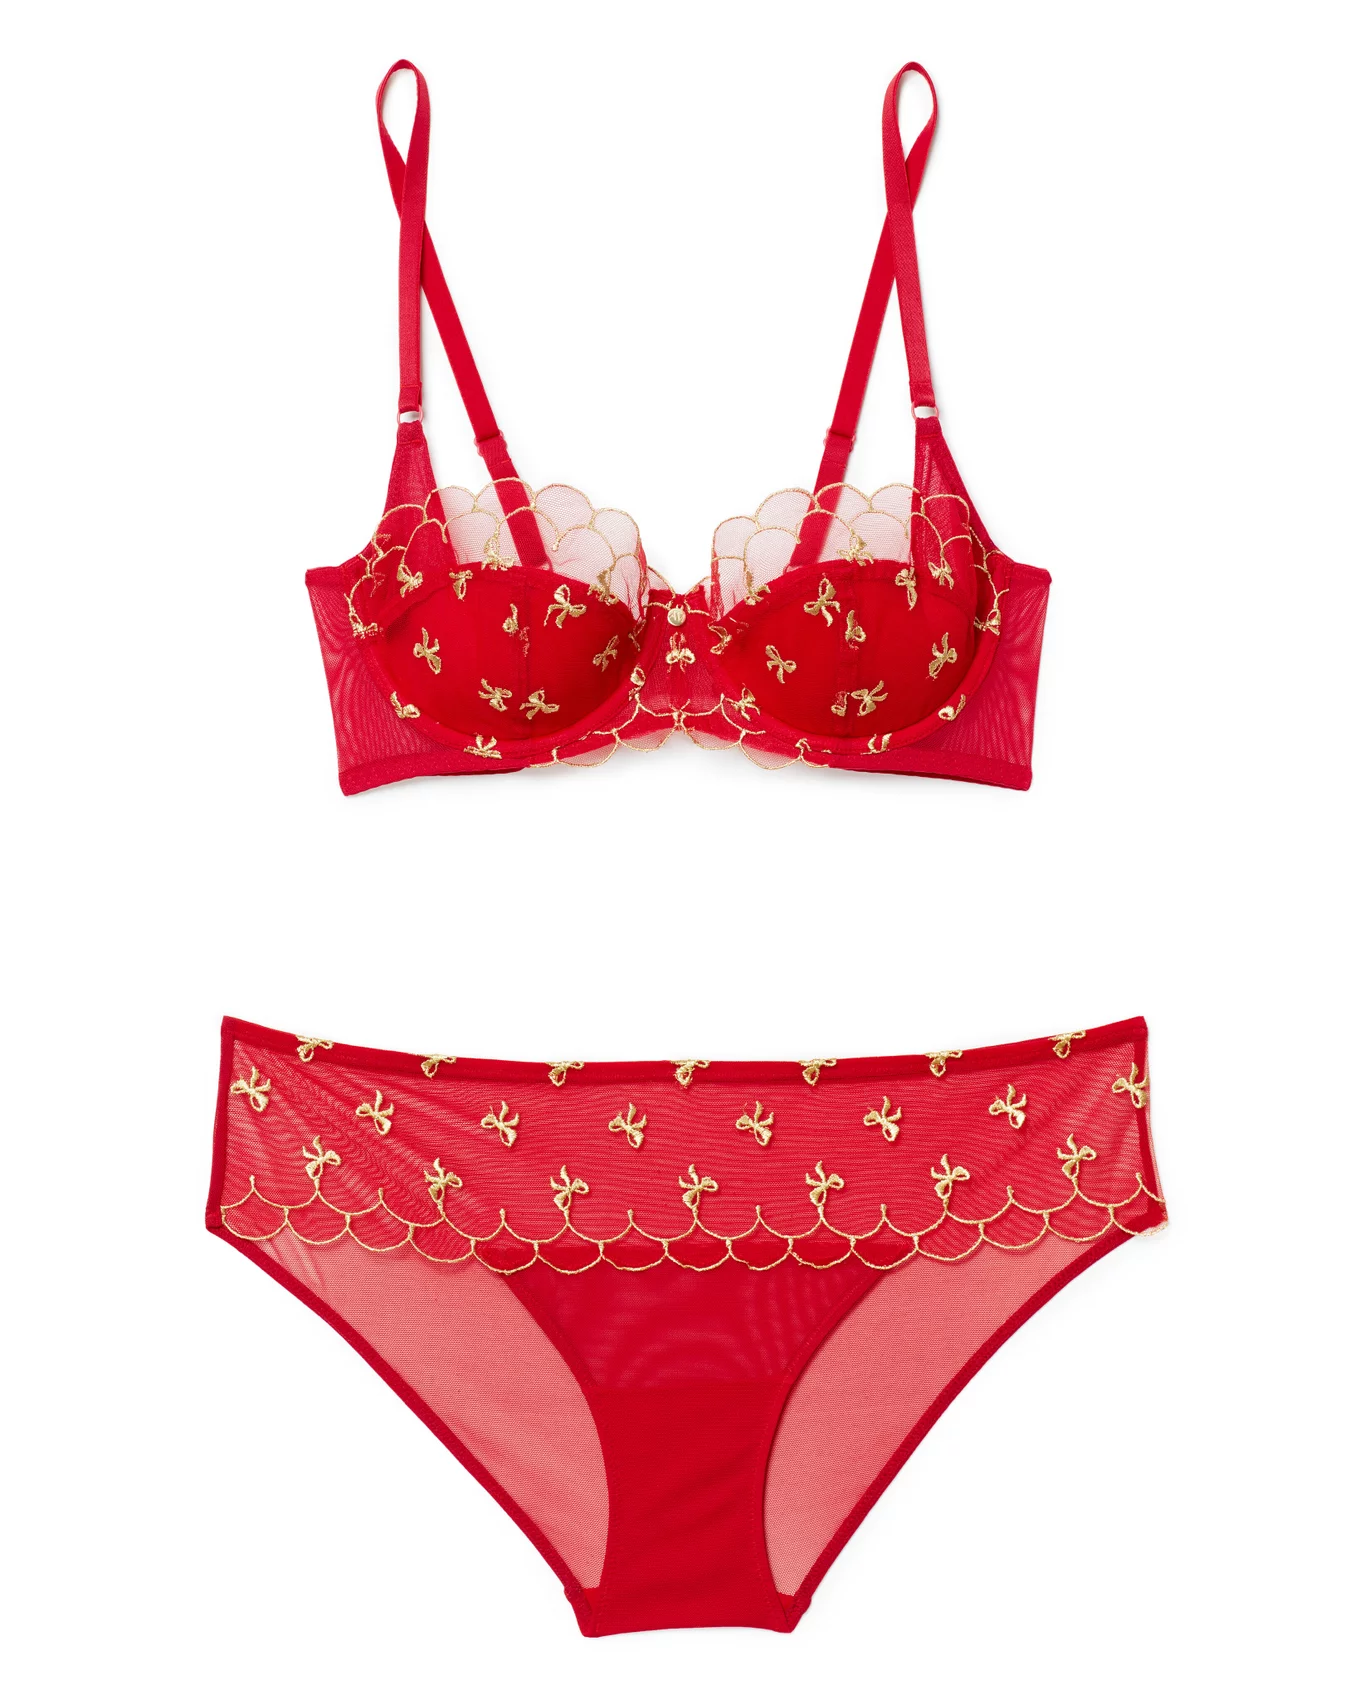 FASHION FLOW RED Lingerie Set for Women Bra Panty Set Combo